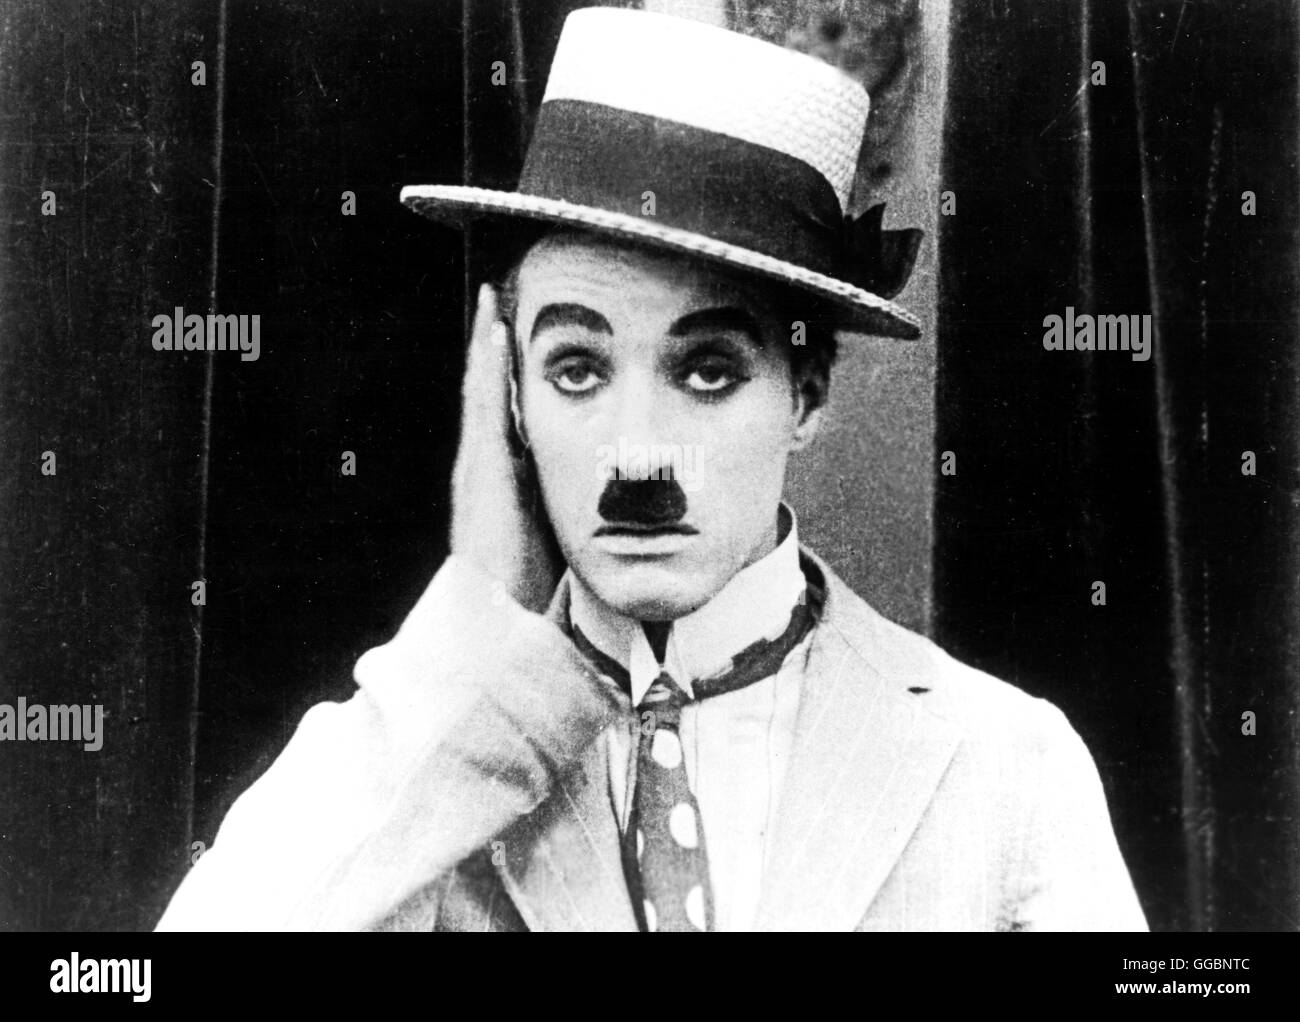 La cura / 1917 / Charlie Chaplin, capanna, Kreissaege, Schnauzbart, Krawatte Foto Stock